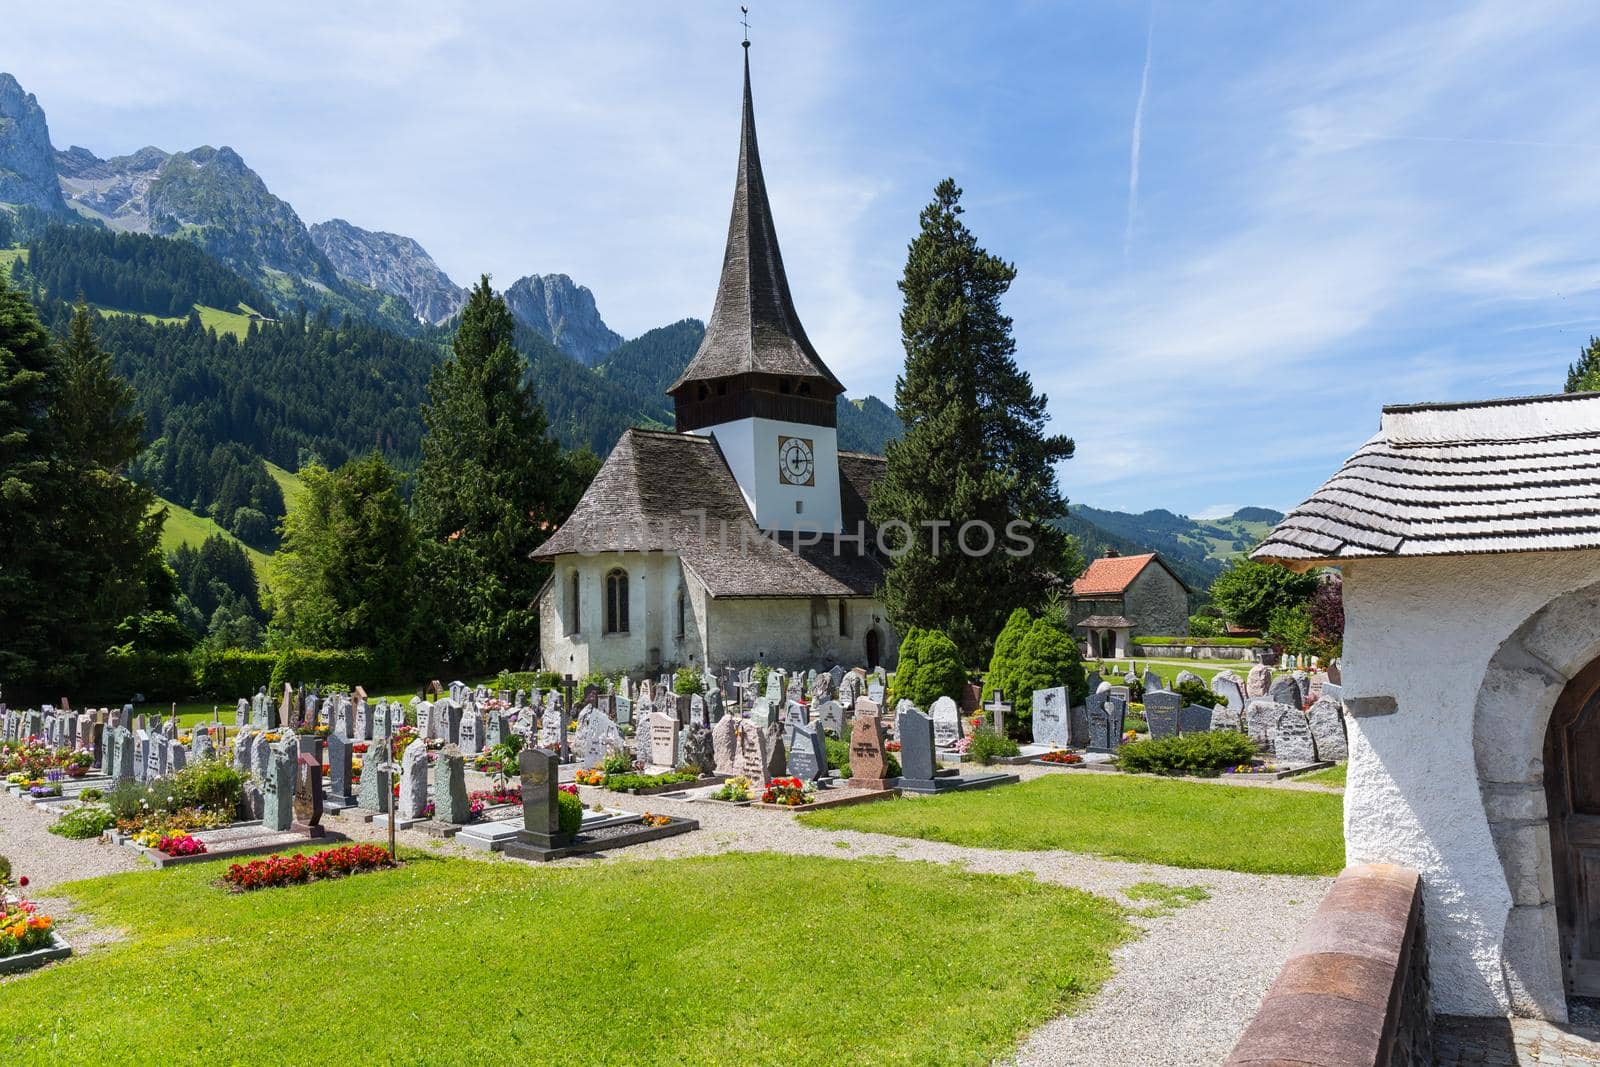 Church in Rougemont Vaud canton Switzerland by RTsubin